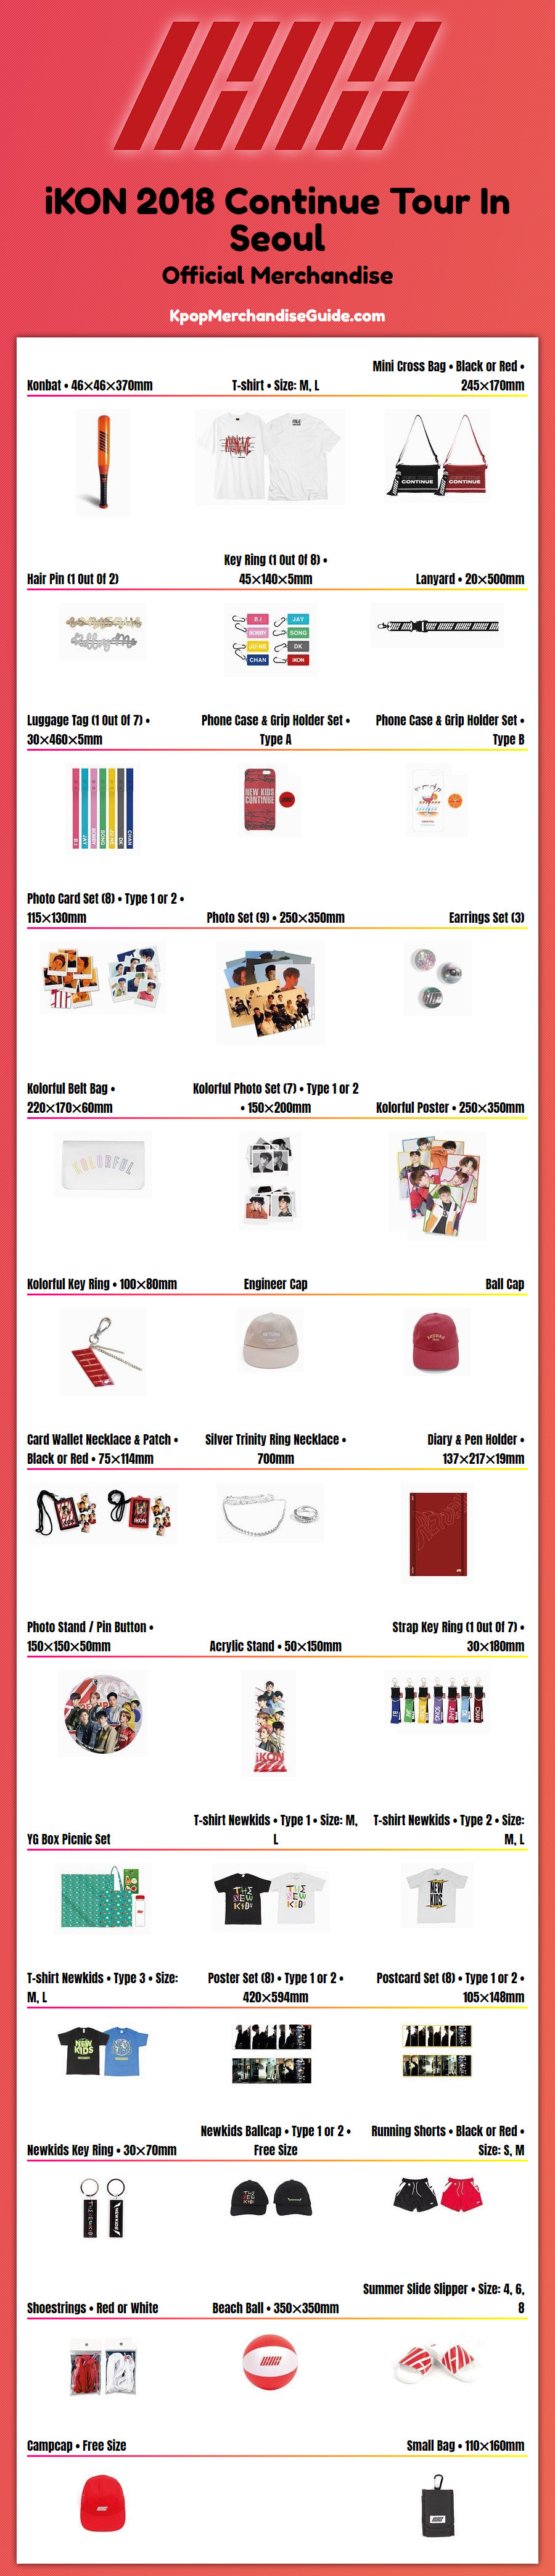 iKON 2018 Continue Tour In Seoul Merchandise